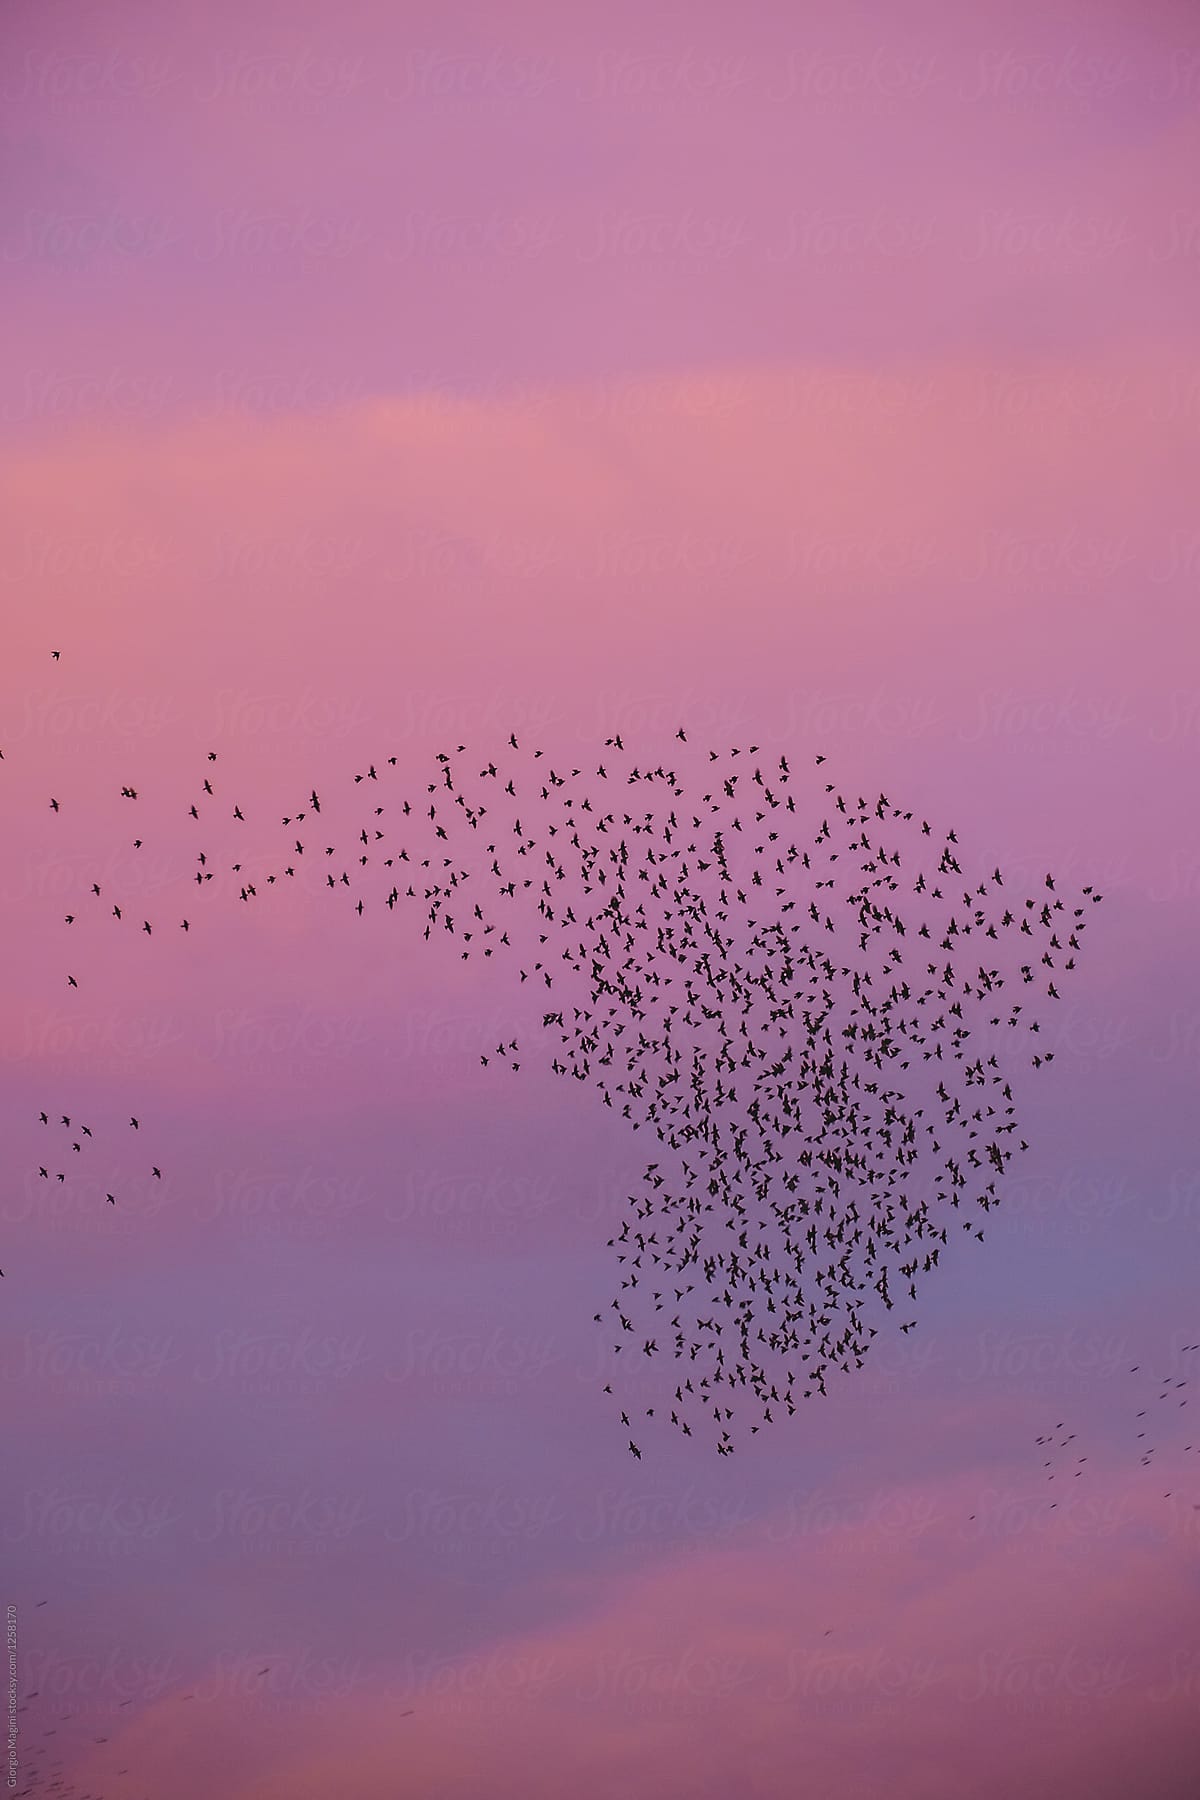 Flock of Birds at Sunset